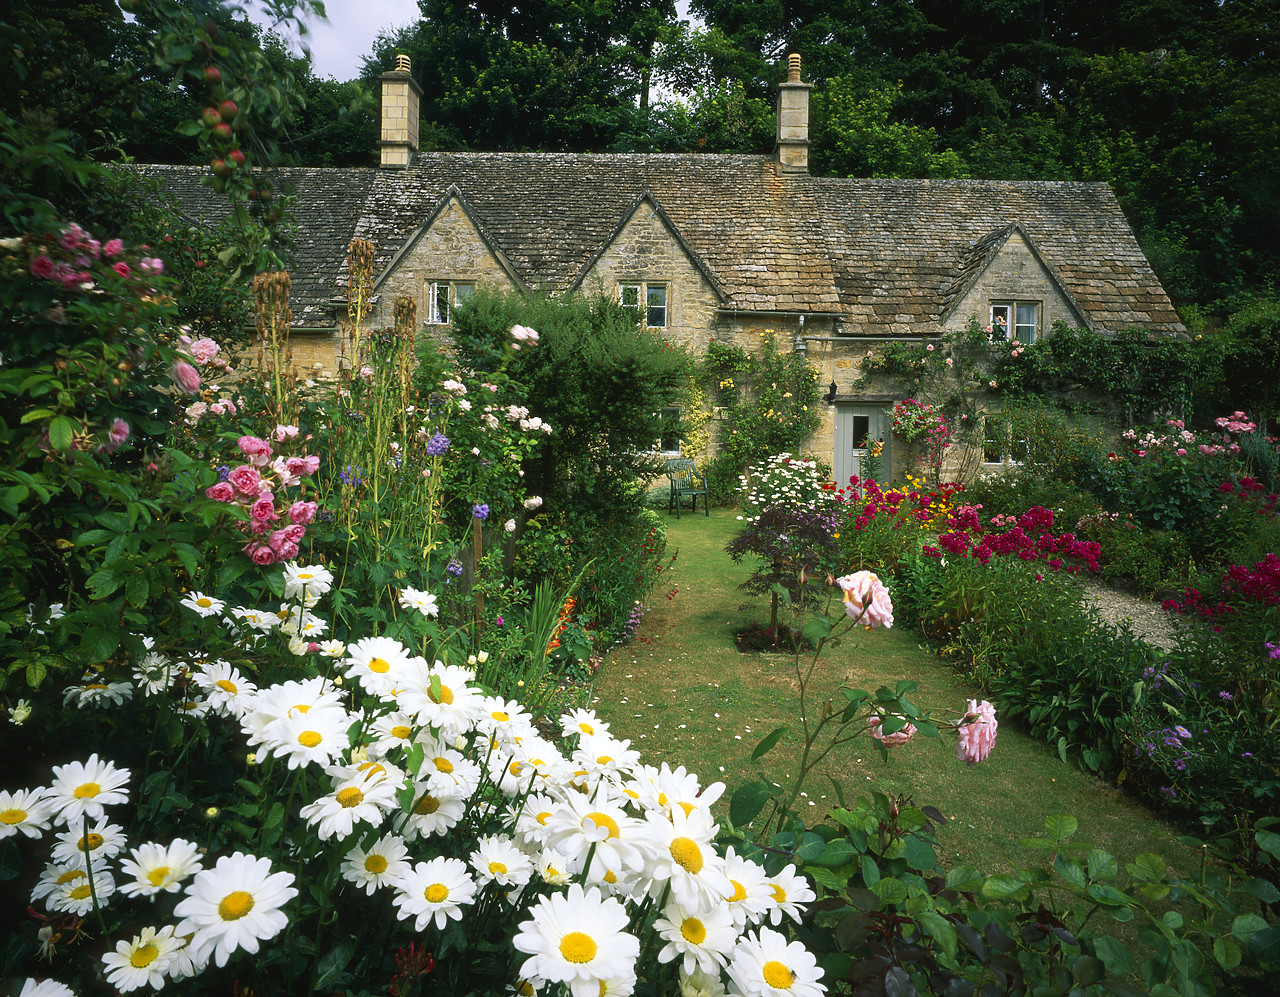 #990428-3 - Cottage Garden, Bibury, Gloucestershire, England